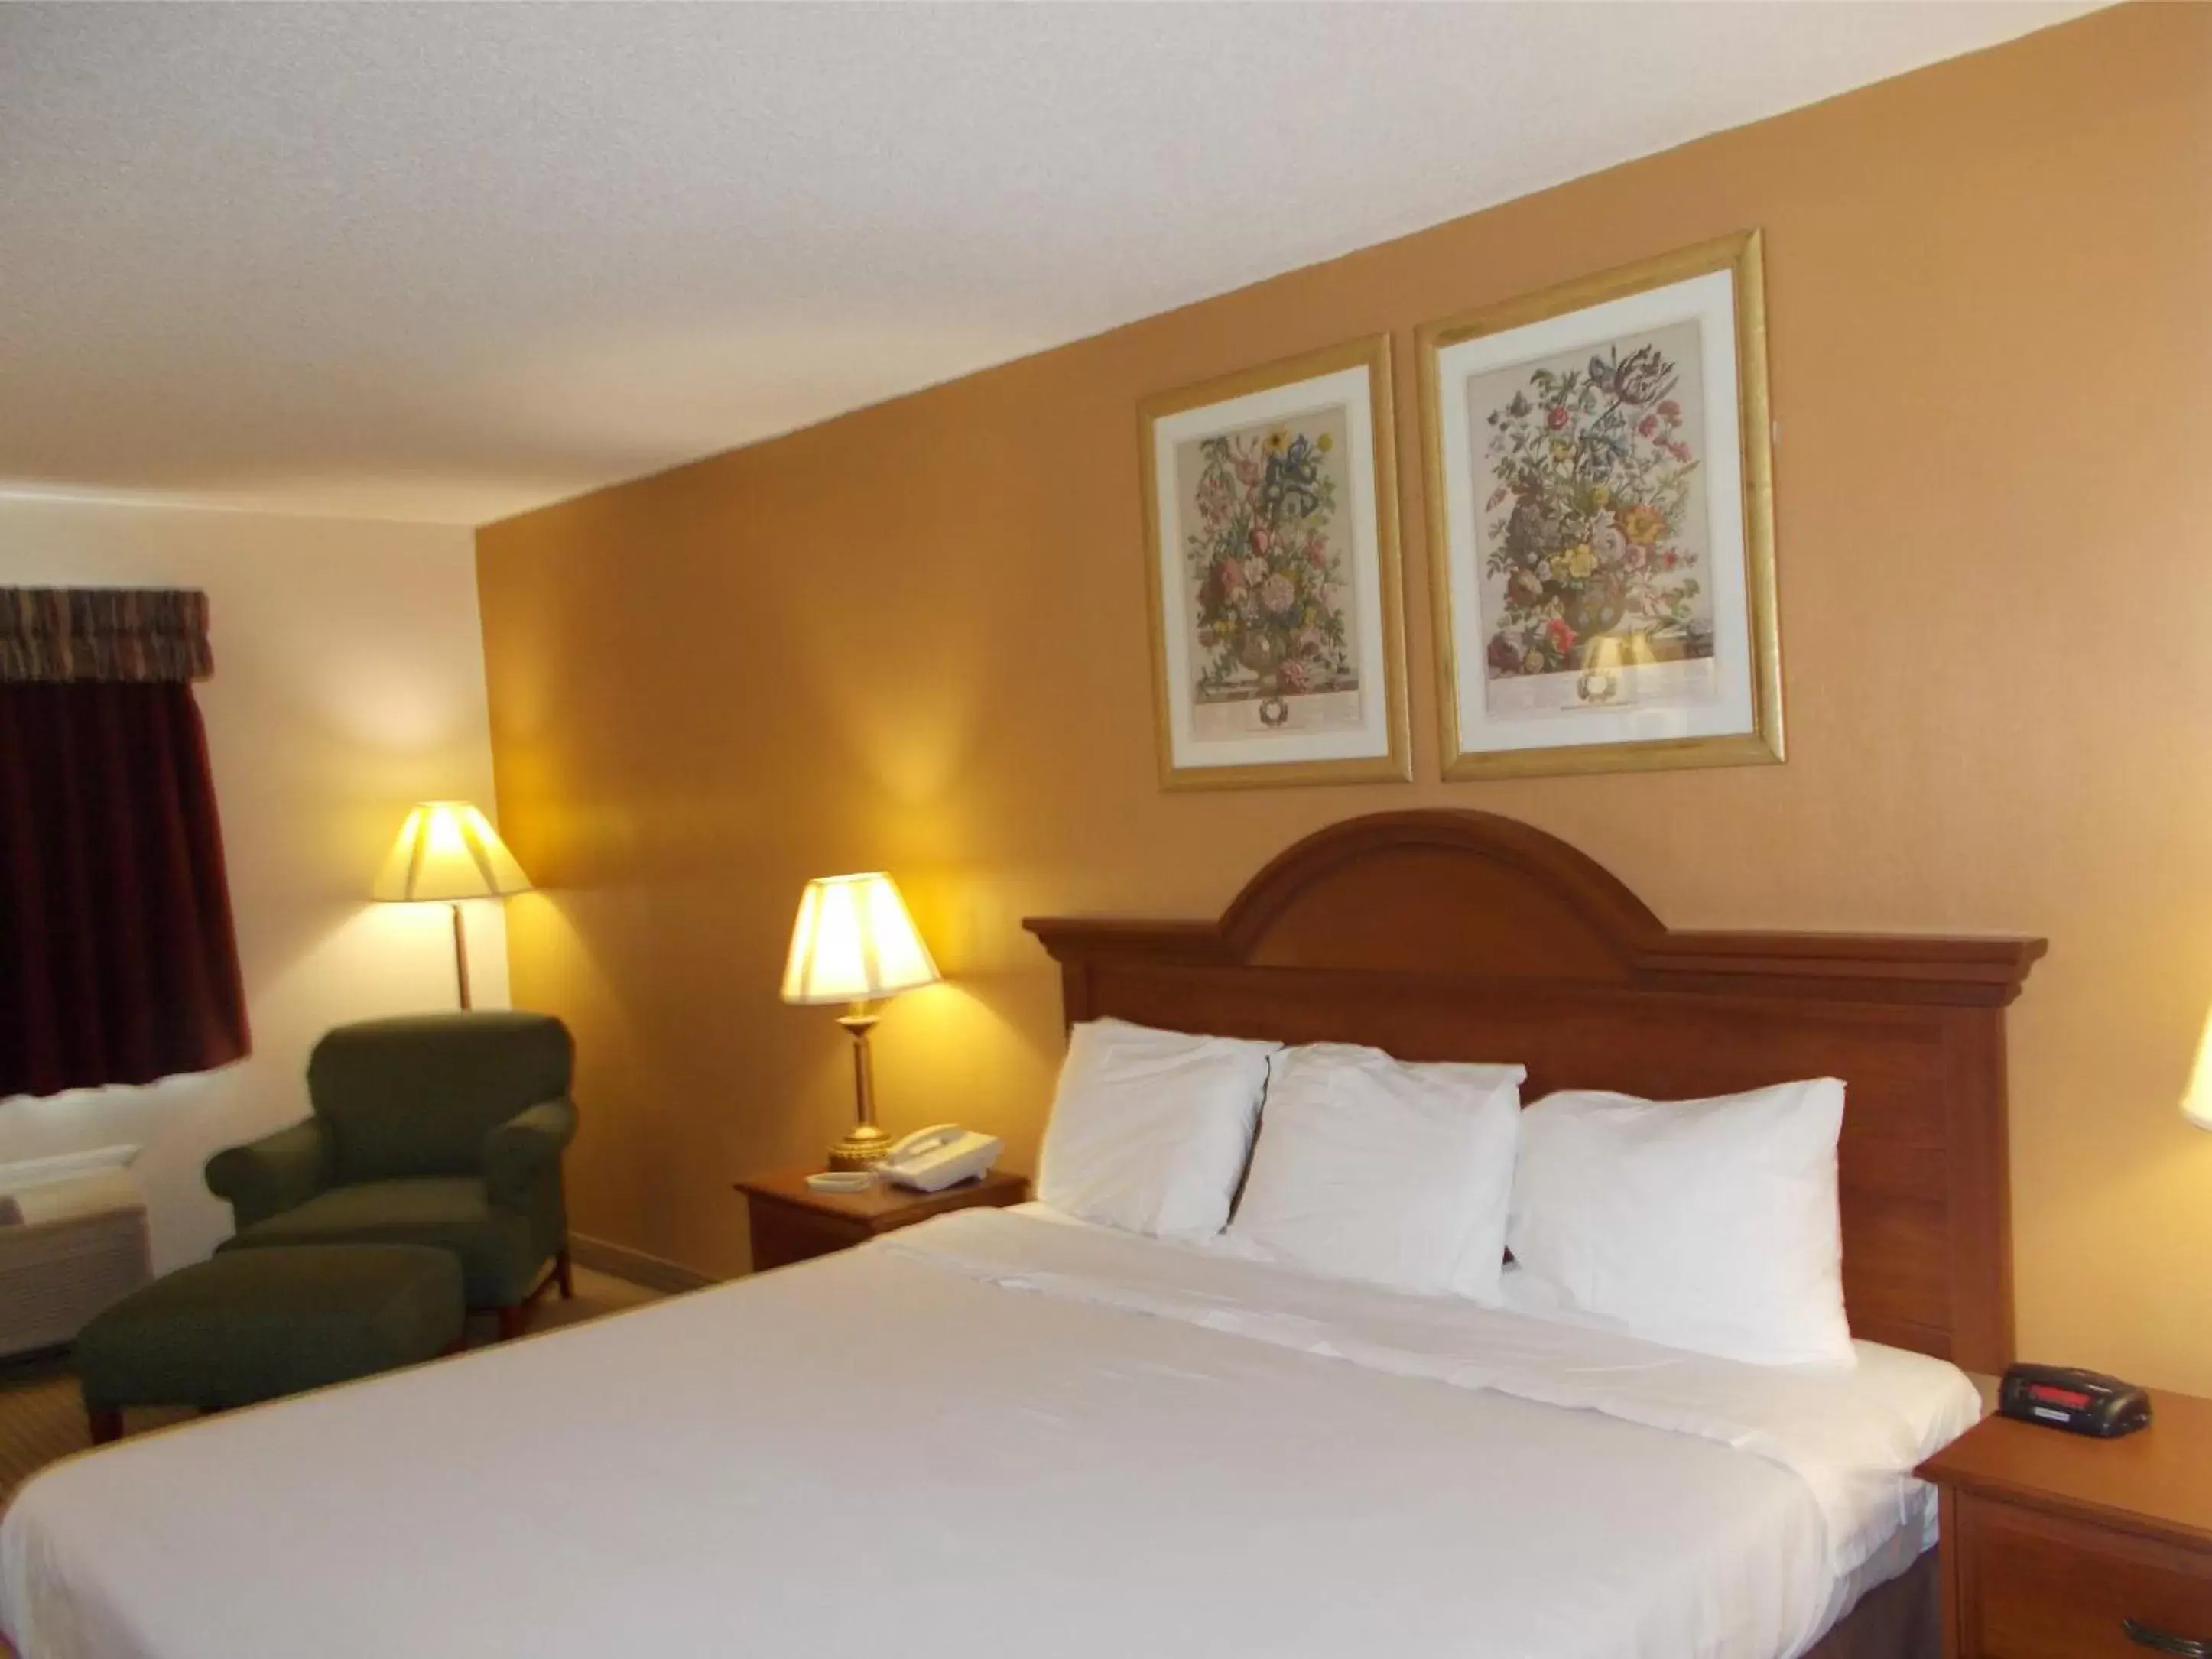 Bedroom, Bed in Royalton Inn and Suites, Wilmington,Ohio